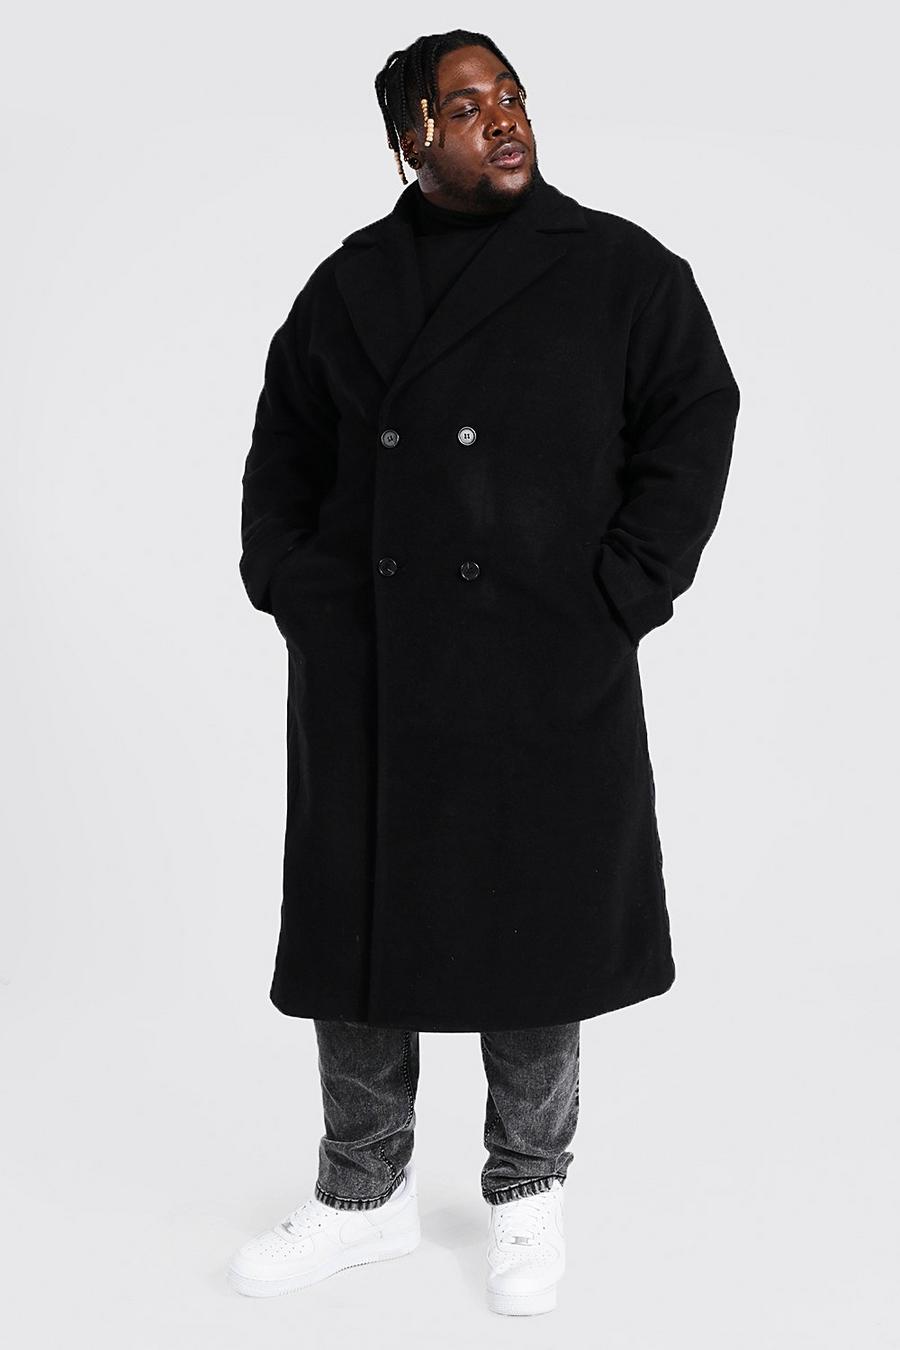 Black מעיל עליון עם פאנל גב בדוגמת קווילט, מידות גדולות image number 1